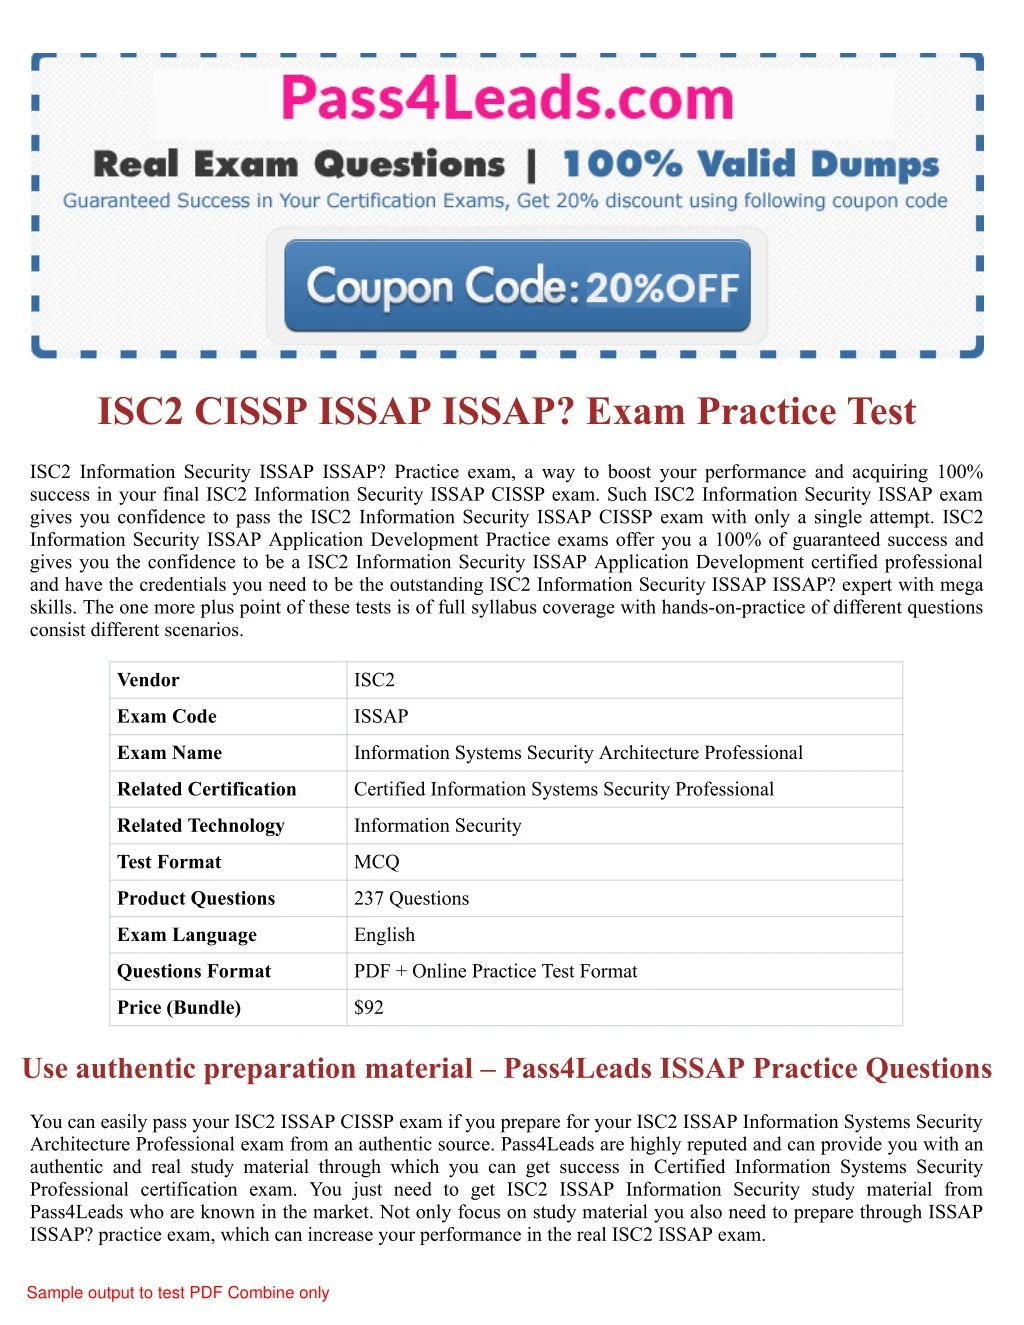 isc2 cissp issap issap exam practice test